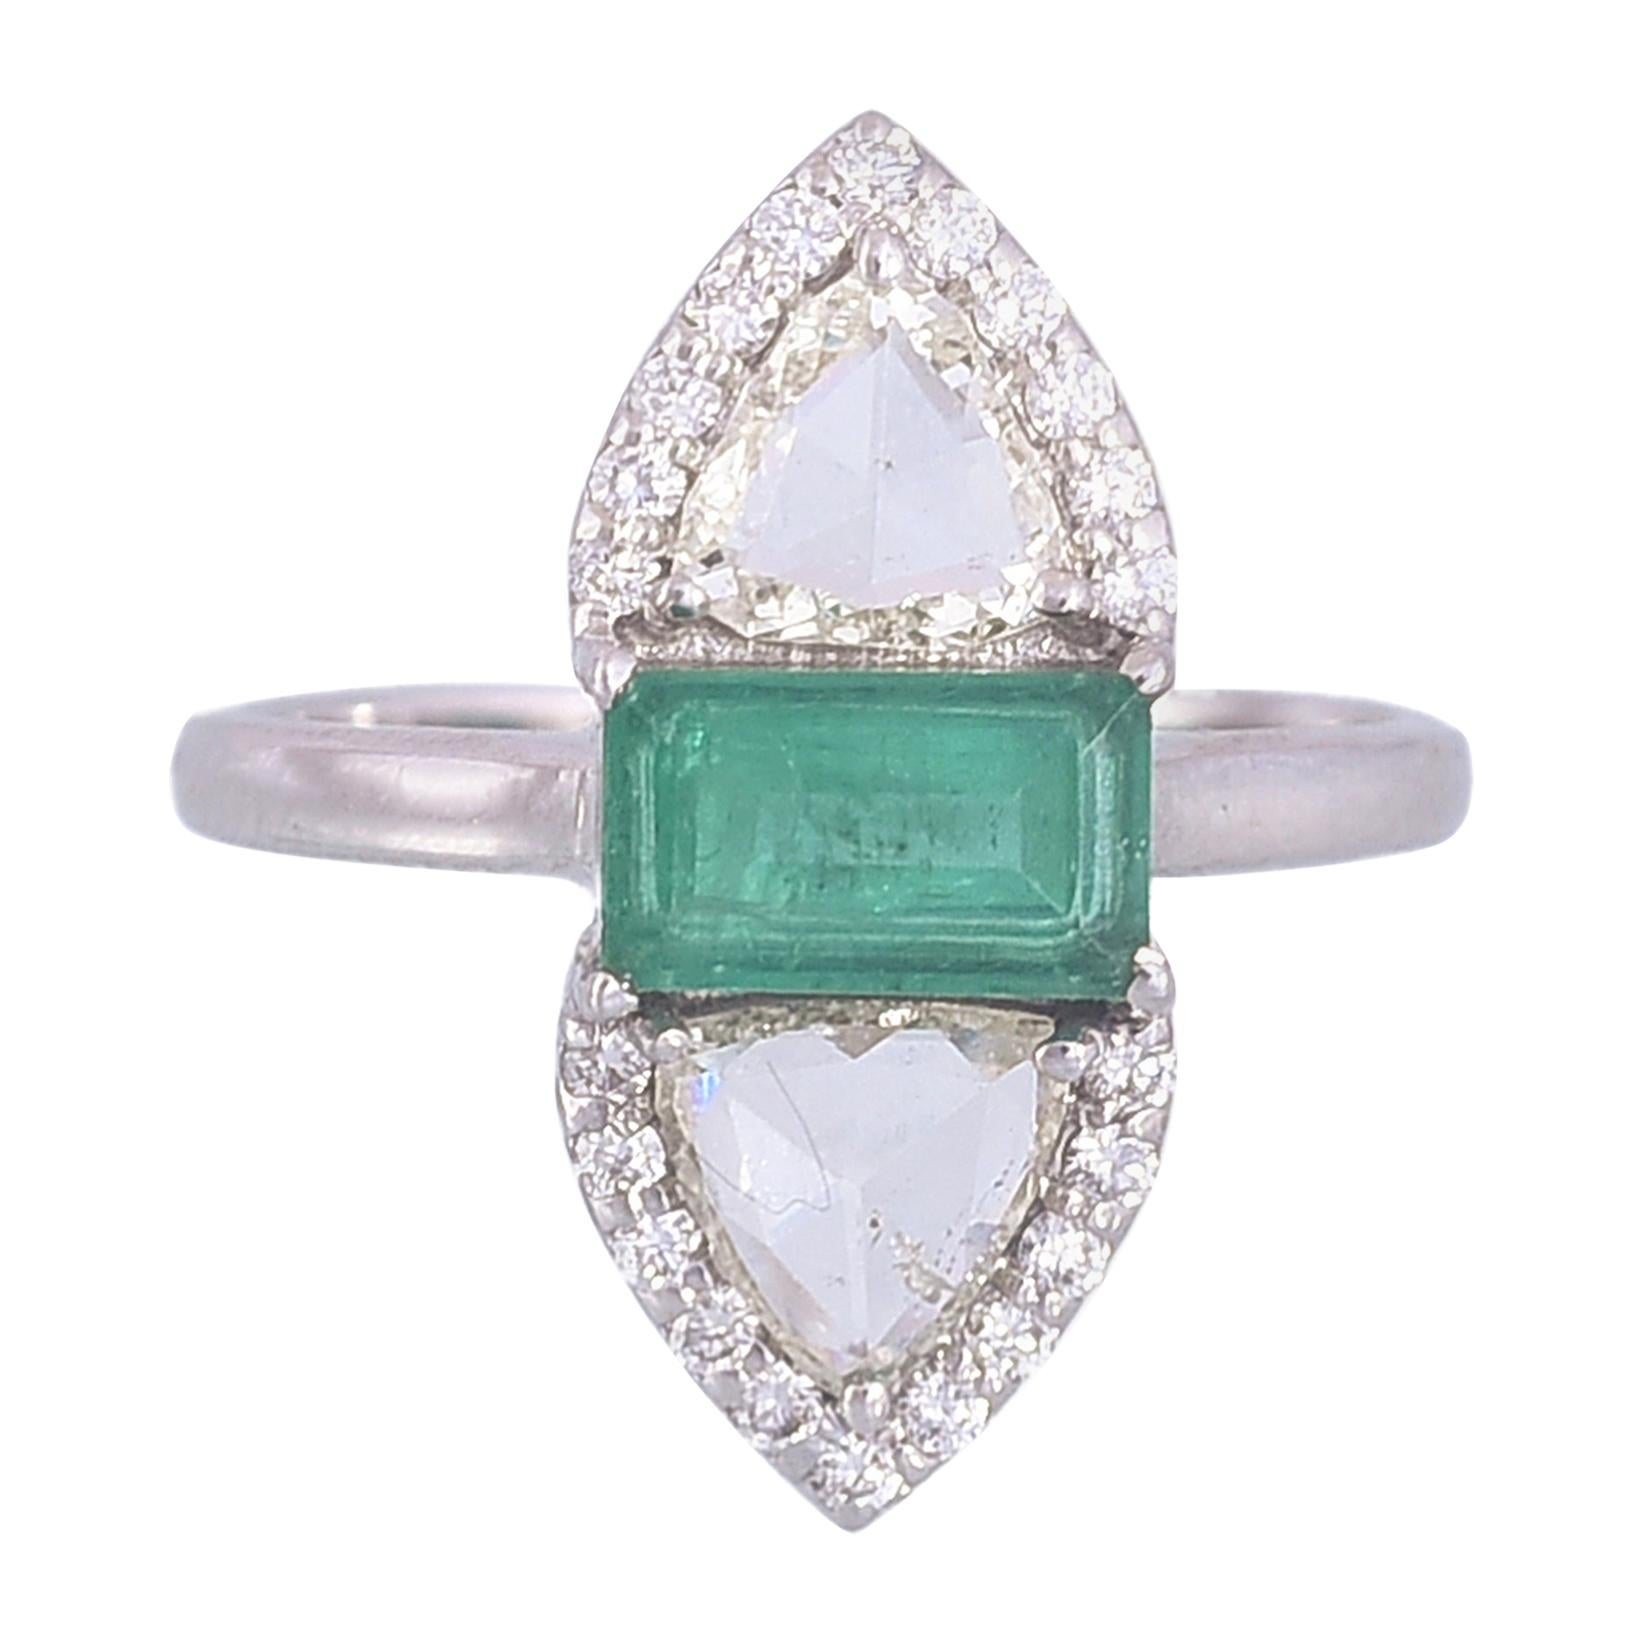 Set in 18 Karat Gold, Zambian Emerald & Rose Cut Diamonds Artistic Cocktail Ring